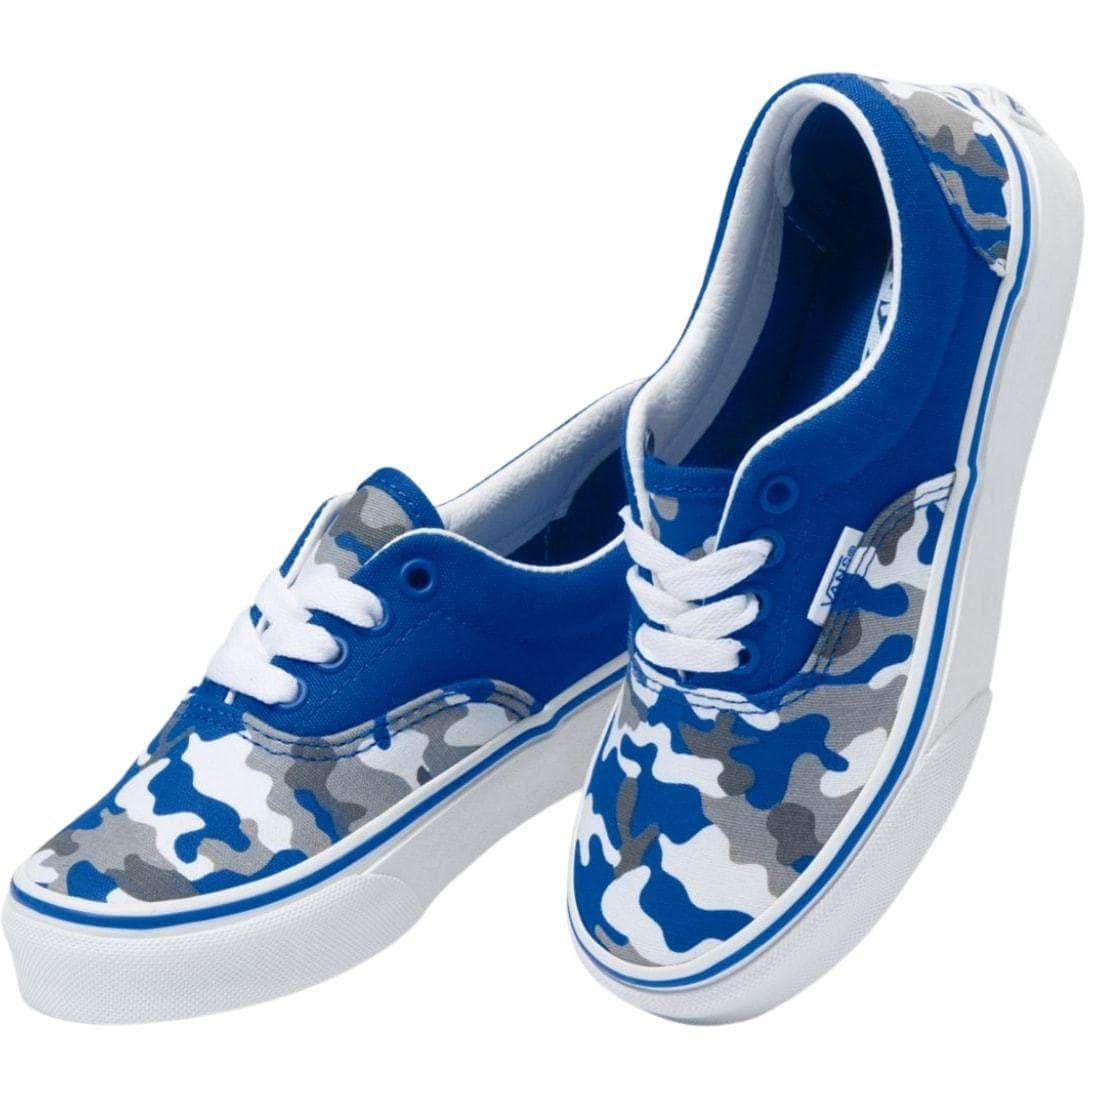 Vans Junior Era Youth Kids Skate Shoes - (Primary Camo) Nautical Blue True White - Boys Skate Shoes by Vans